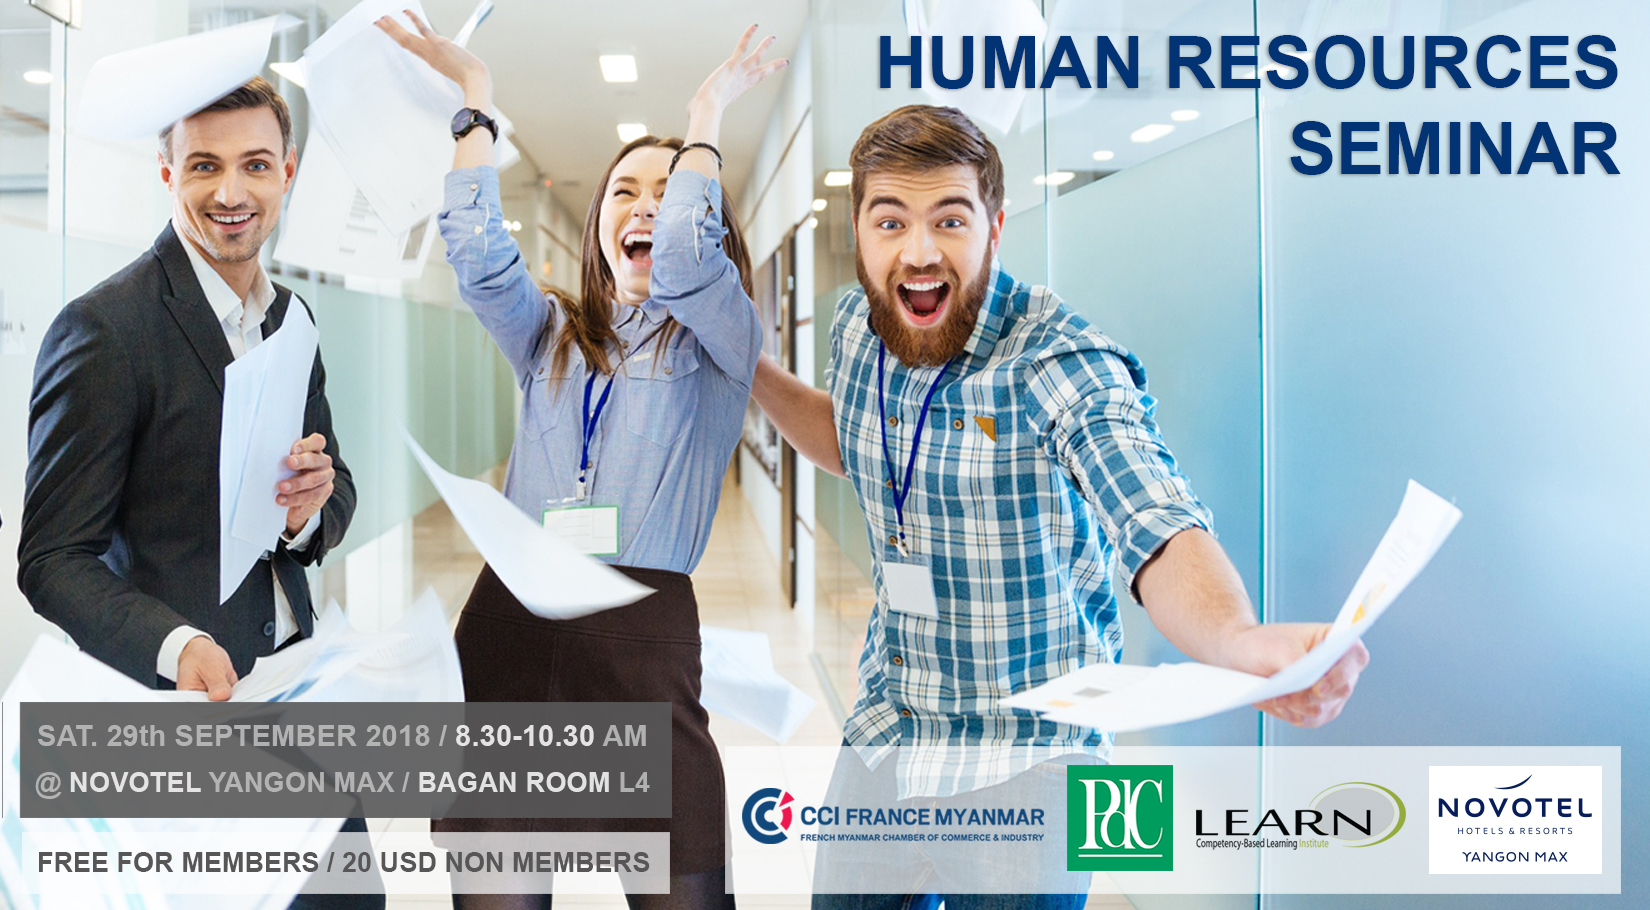 Human Resources Seminar CCI France Myanmar